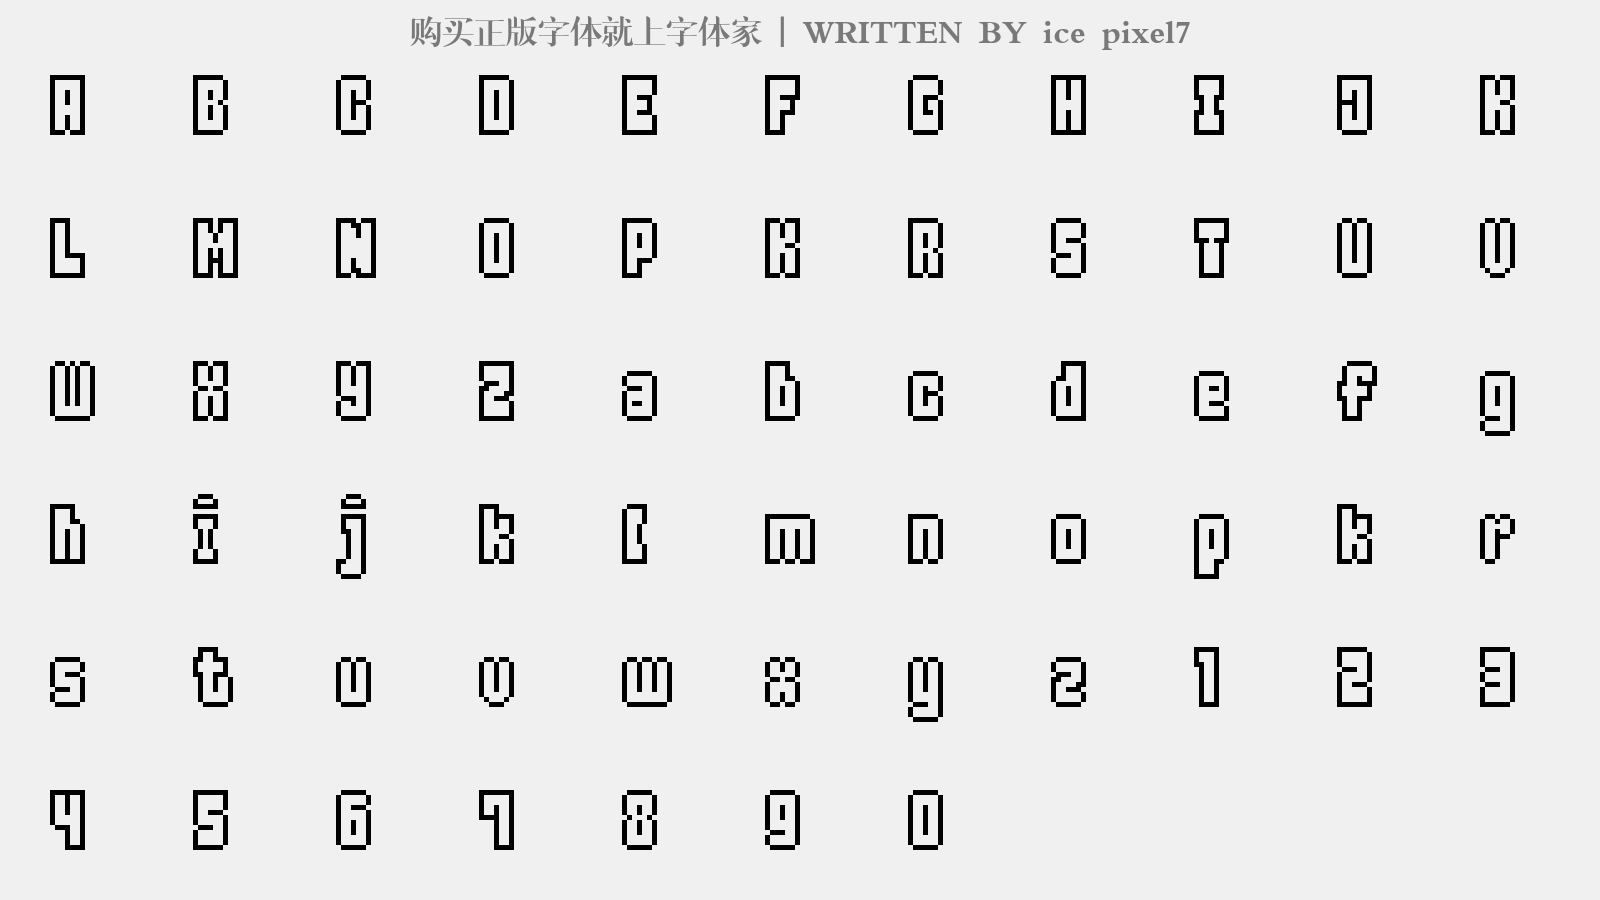 ice pixel7 - 大写字母/小写字母/数字